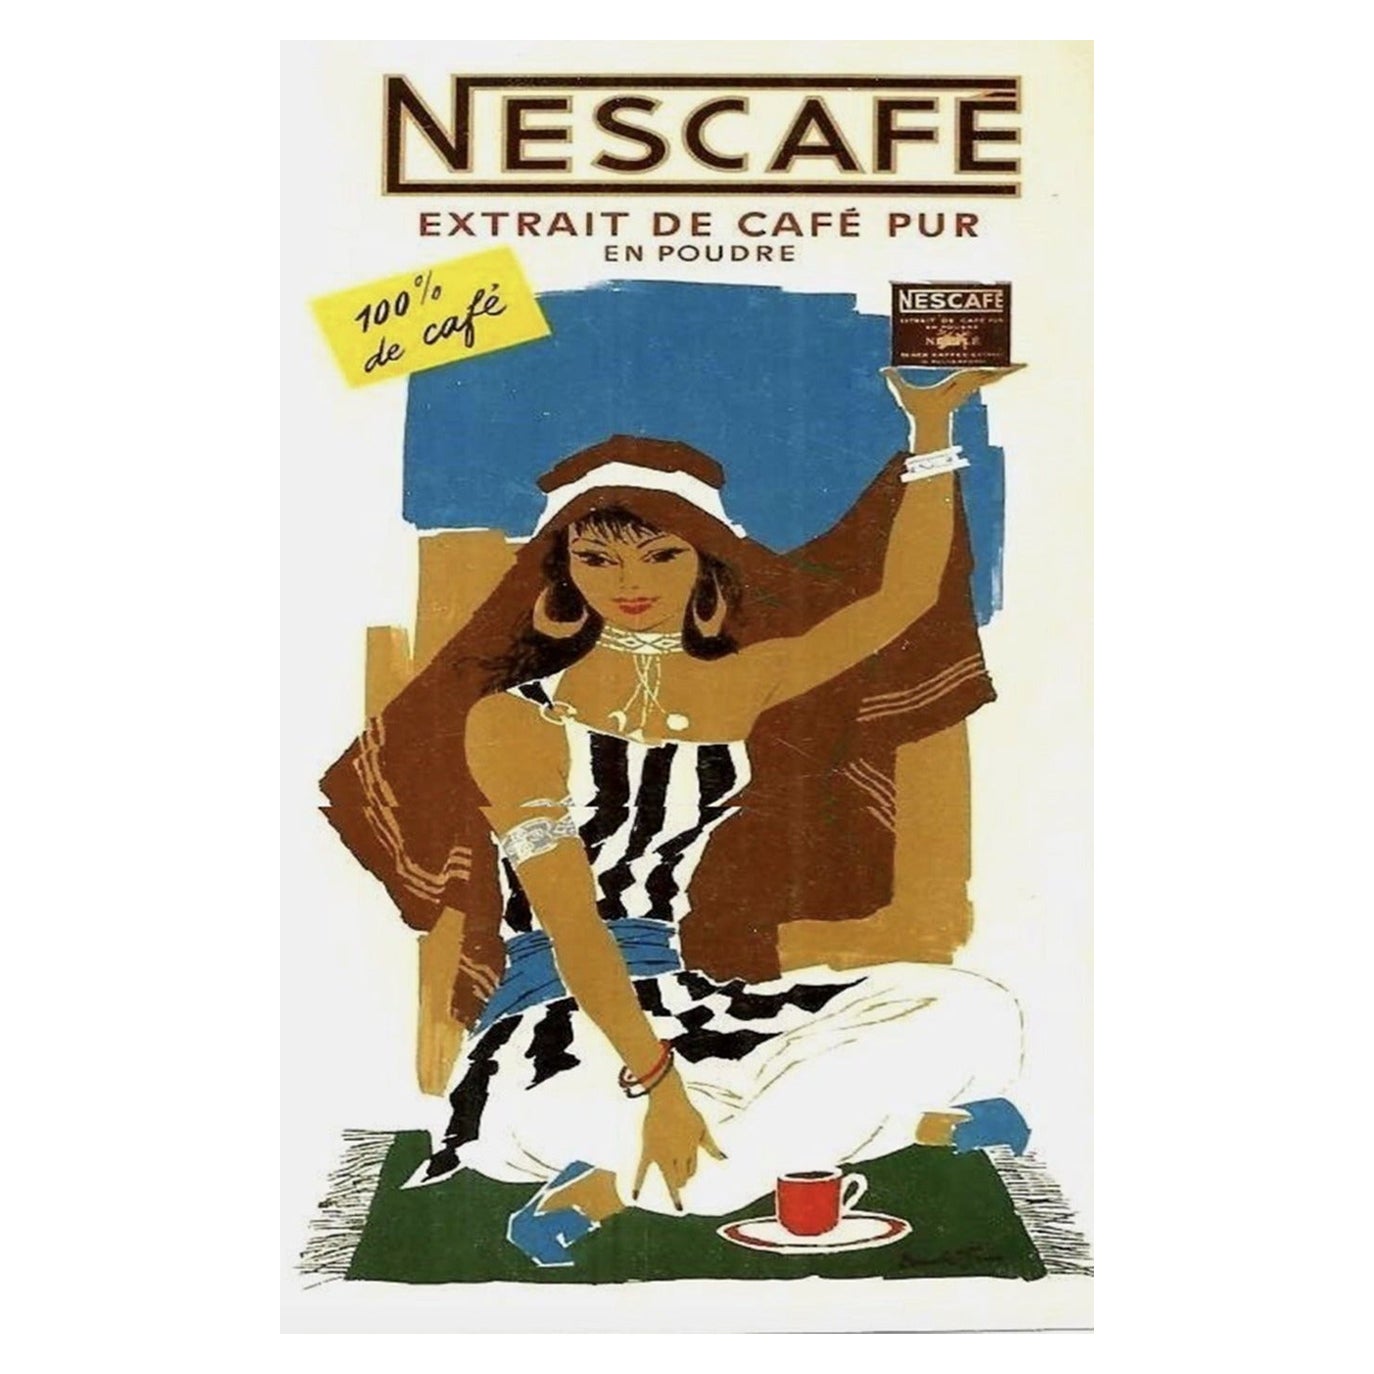 Nescafe - Pure Coffee Extract - Affiche originale vintage de 1960